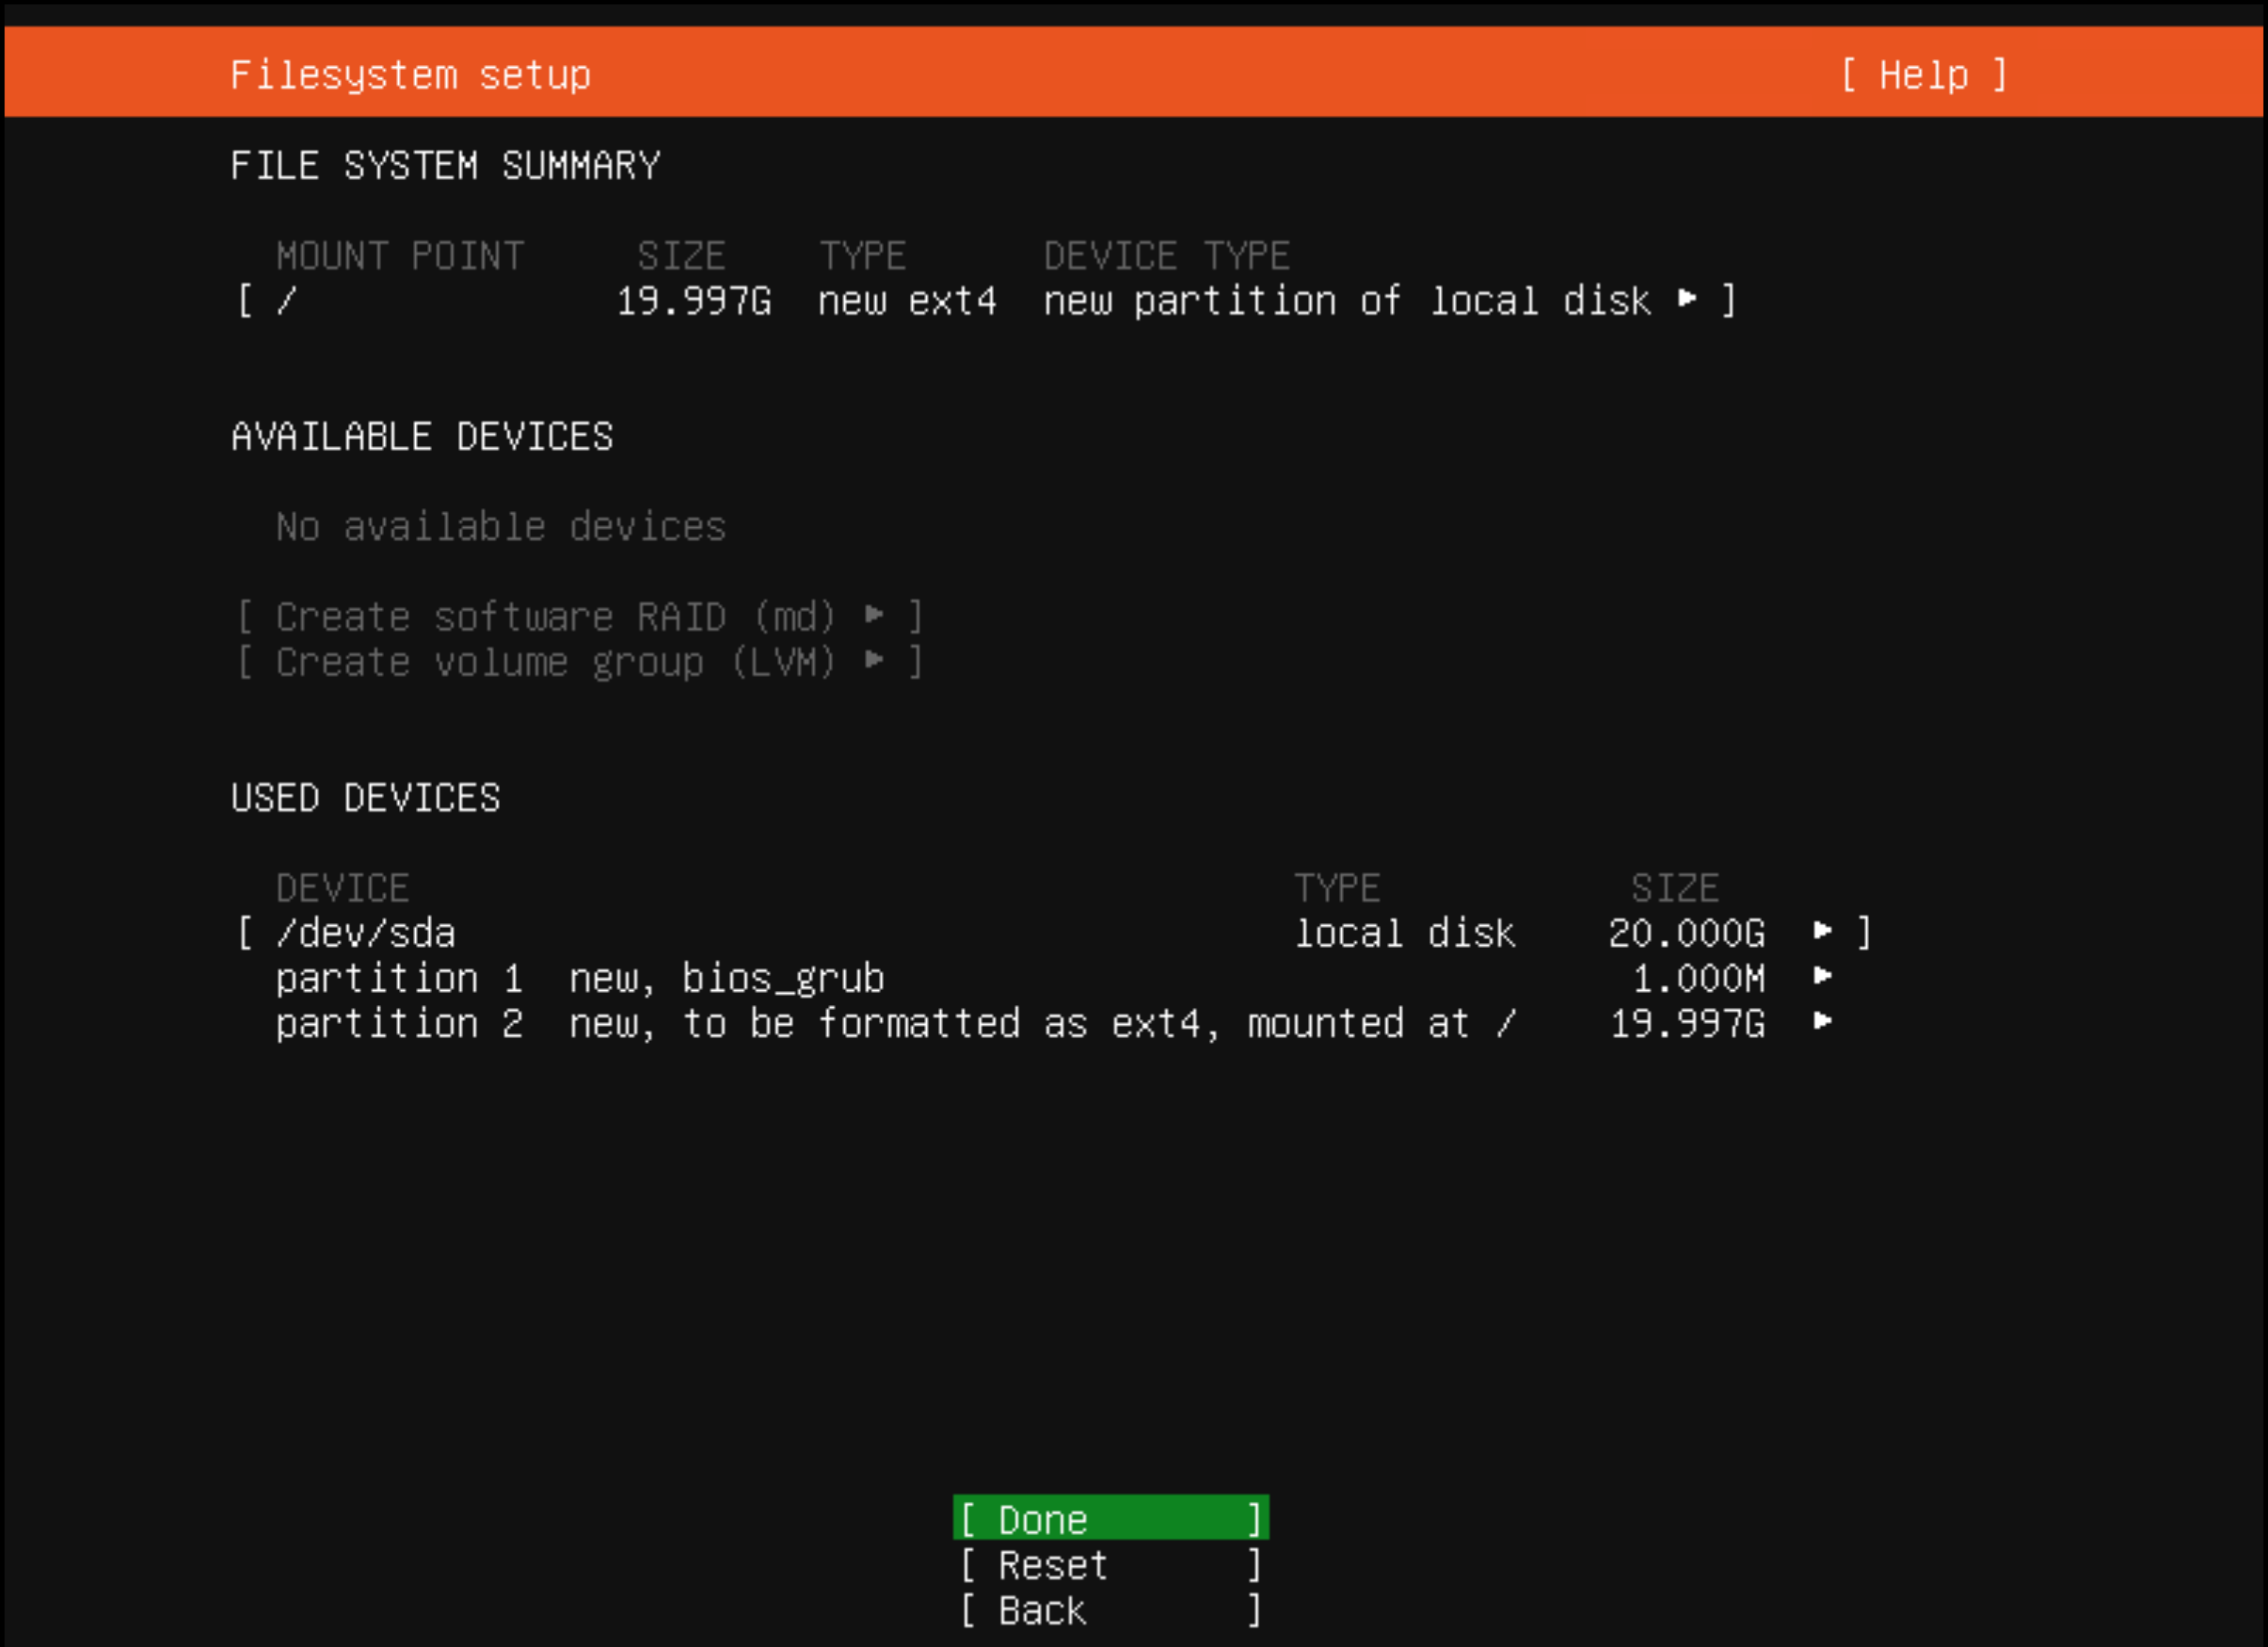 Thirteenth screenshot of an Ubuntu installation.